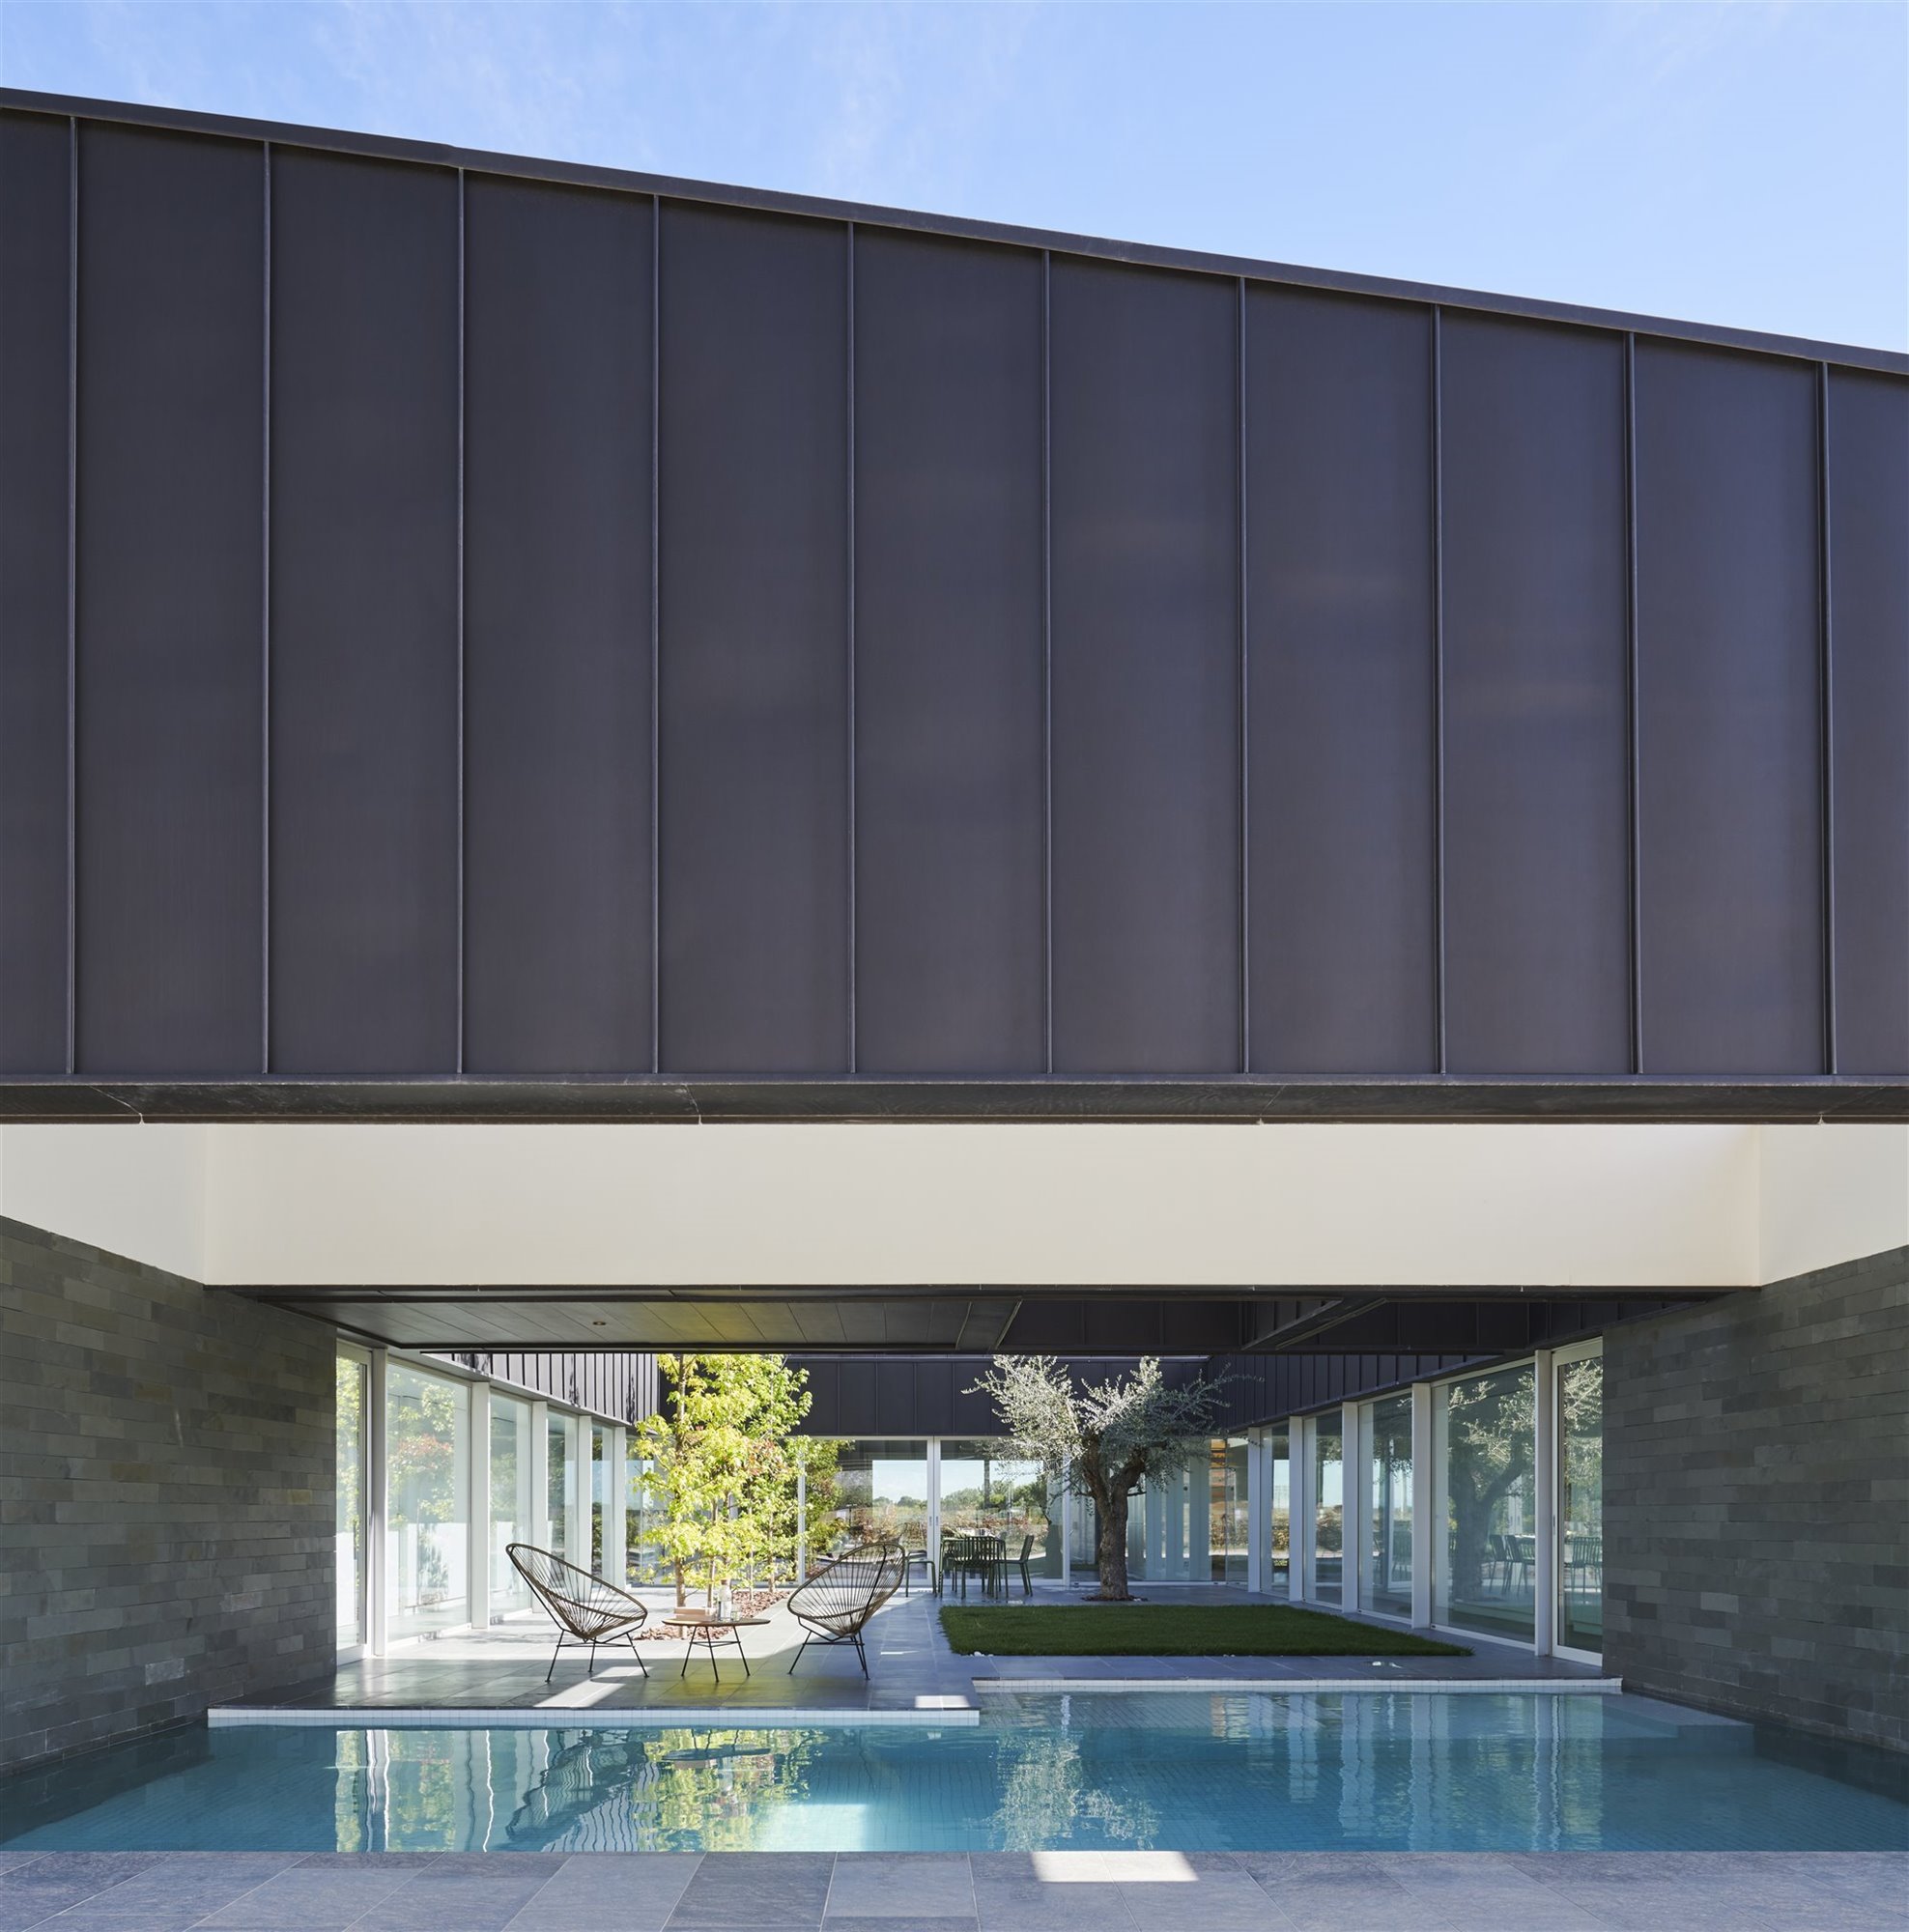 Casa moderna con fachada metalica y piscina